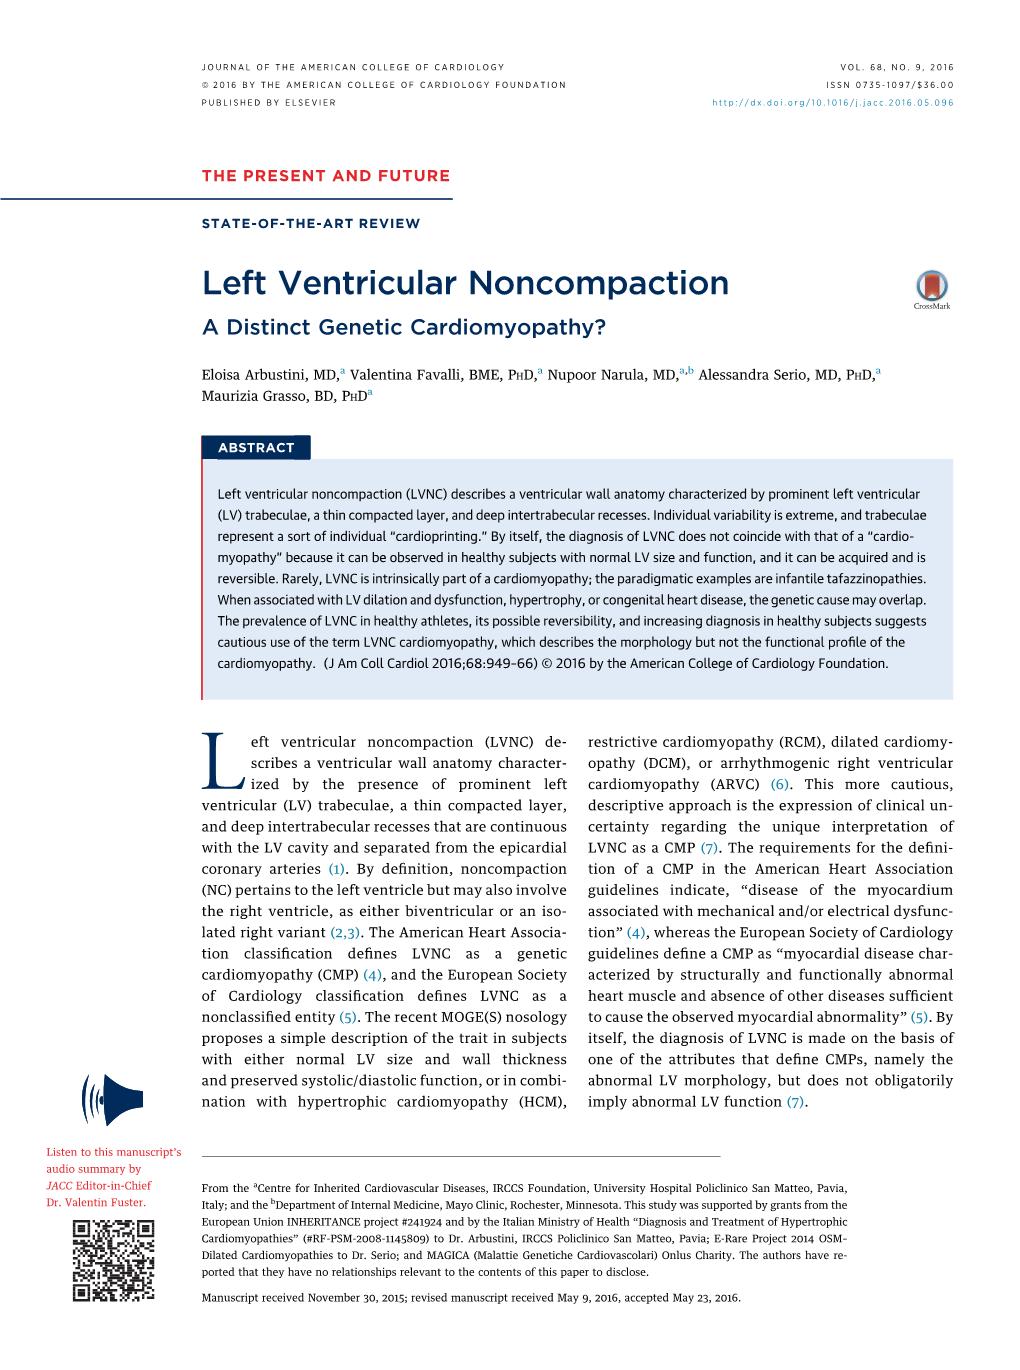 Left Ventricular Noncompaction a Distinct Genetic Cardiomyopathy?